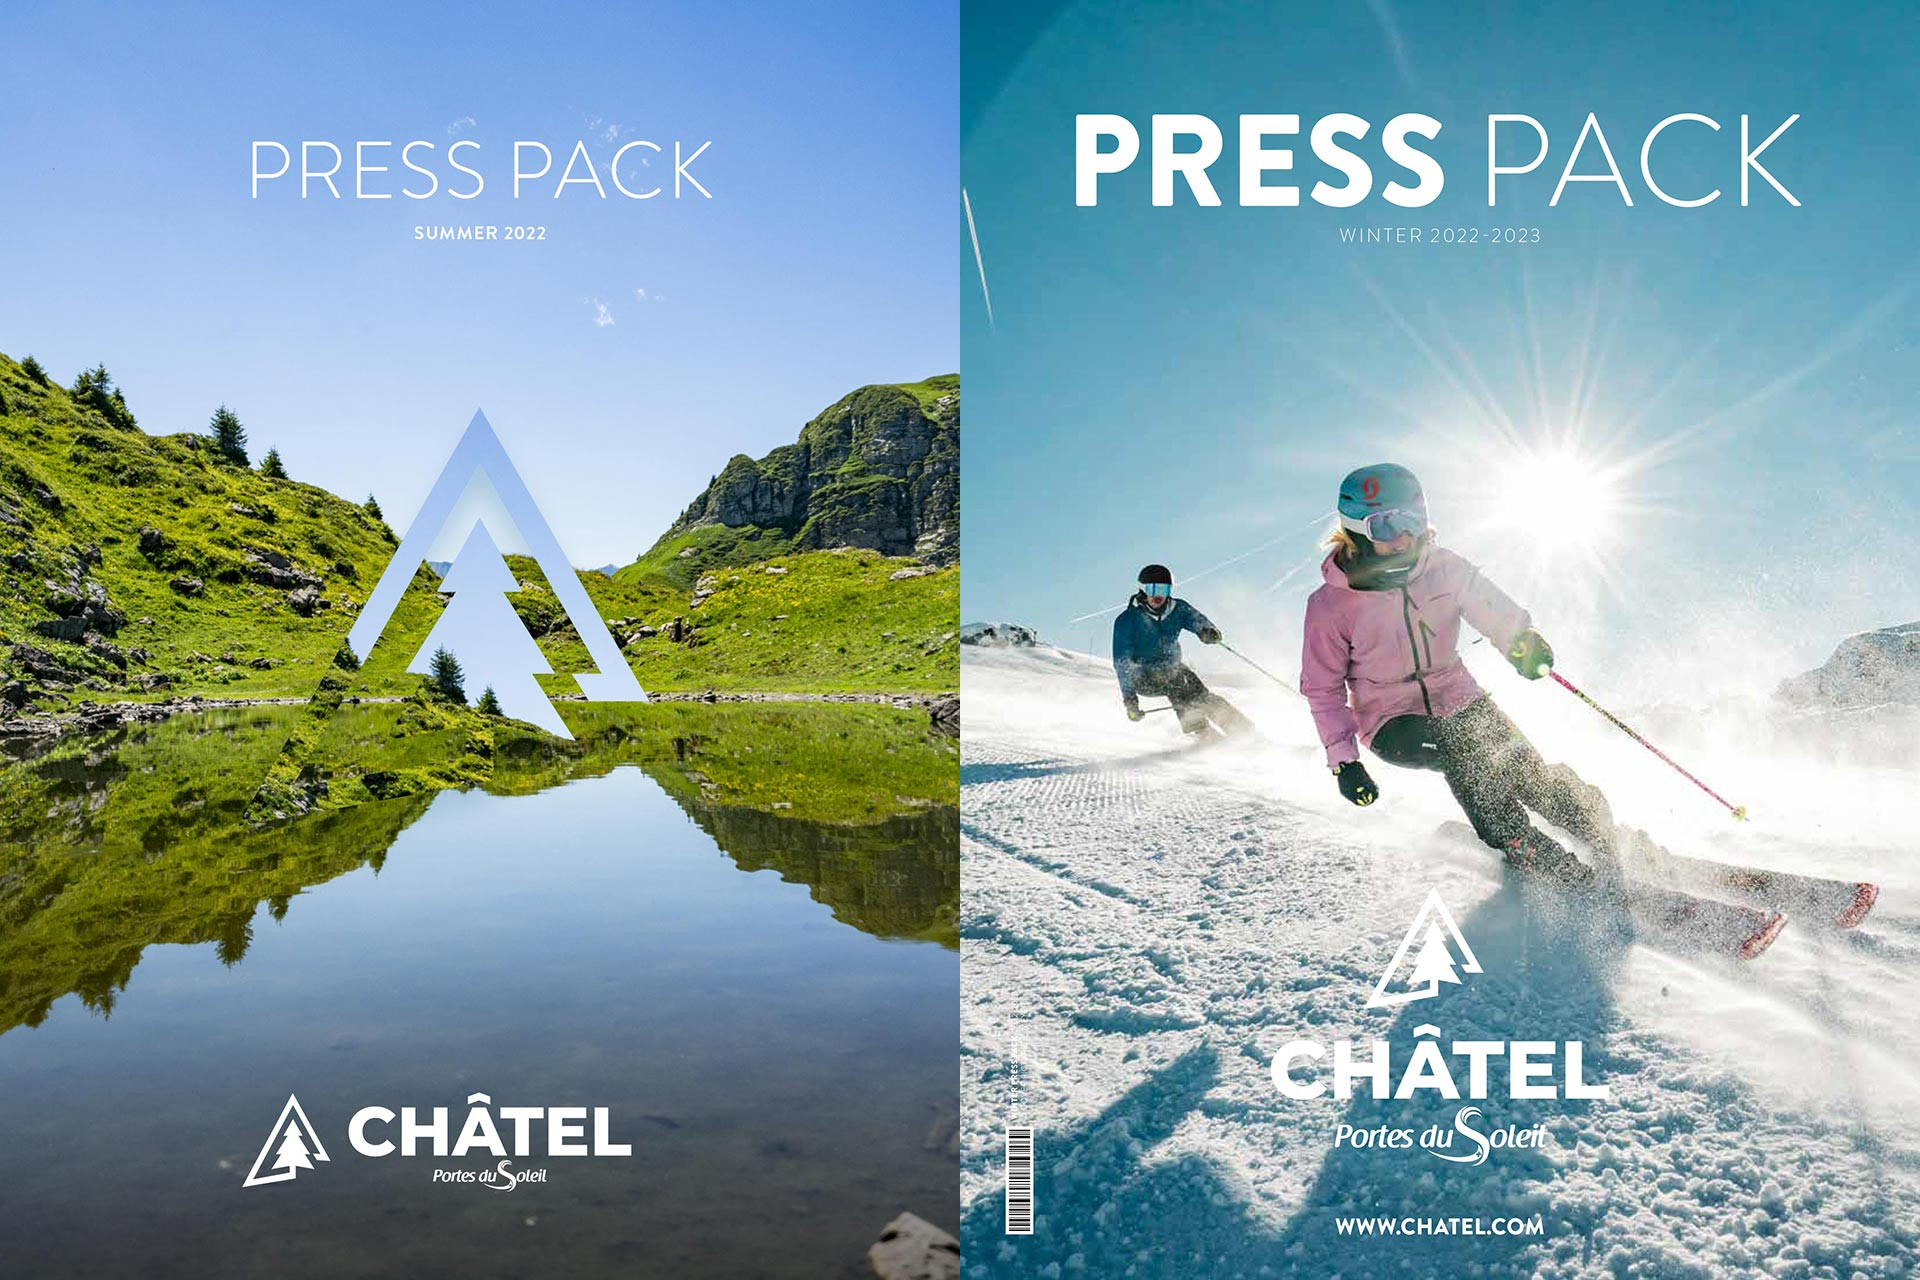 Press packs